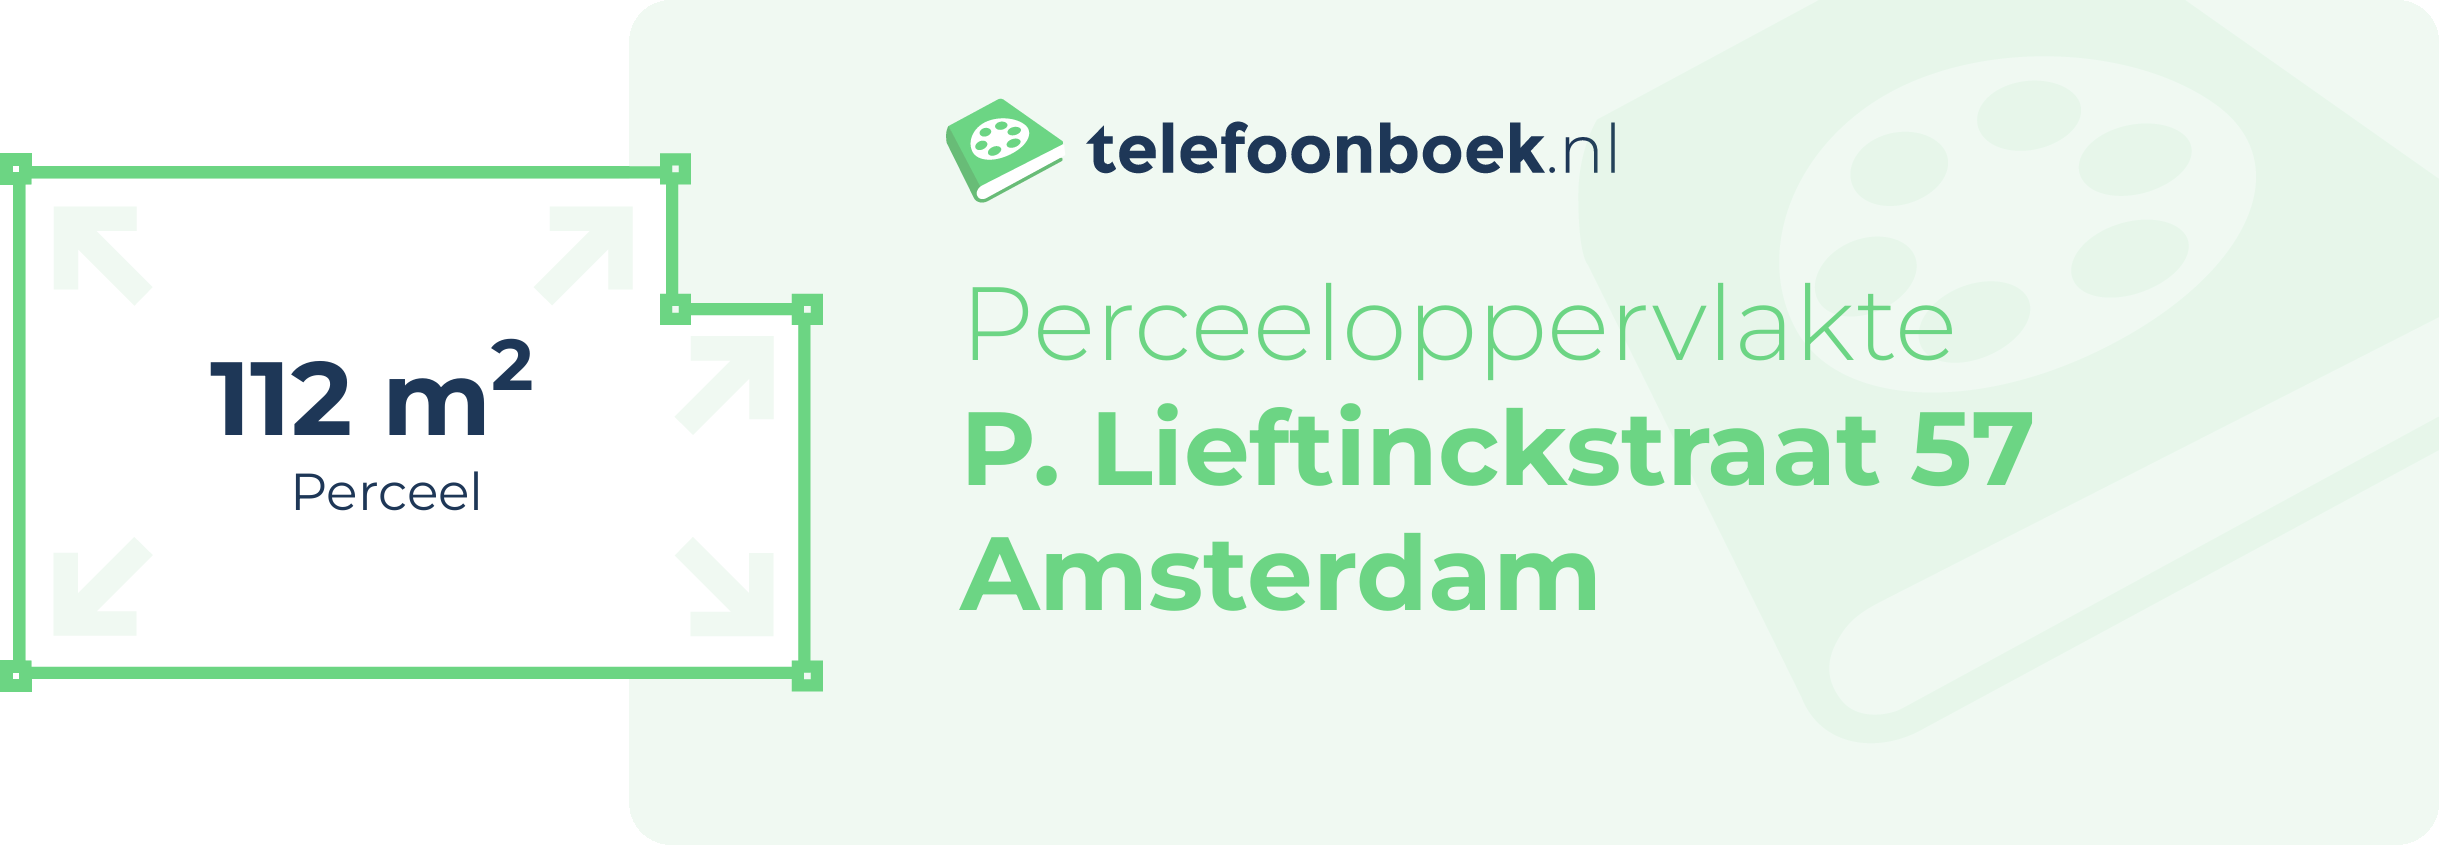 Perceeloppervlakte P. Lieftinckstraat 57 Amsterdam